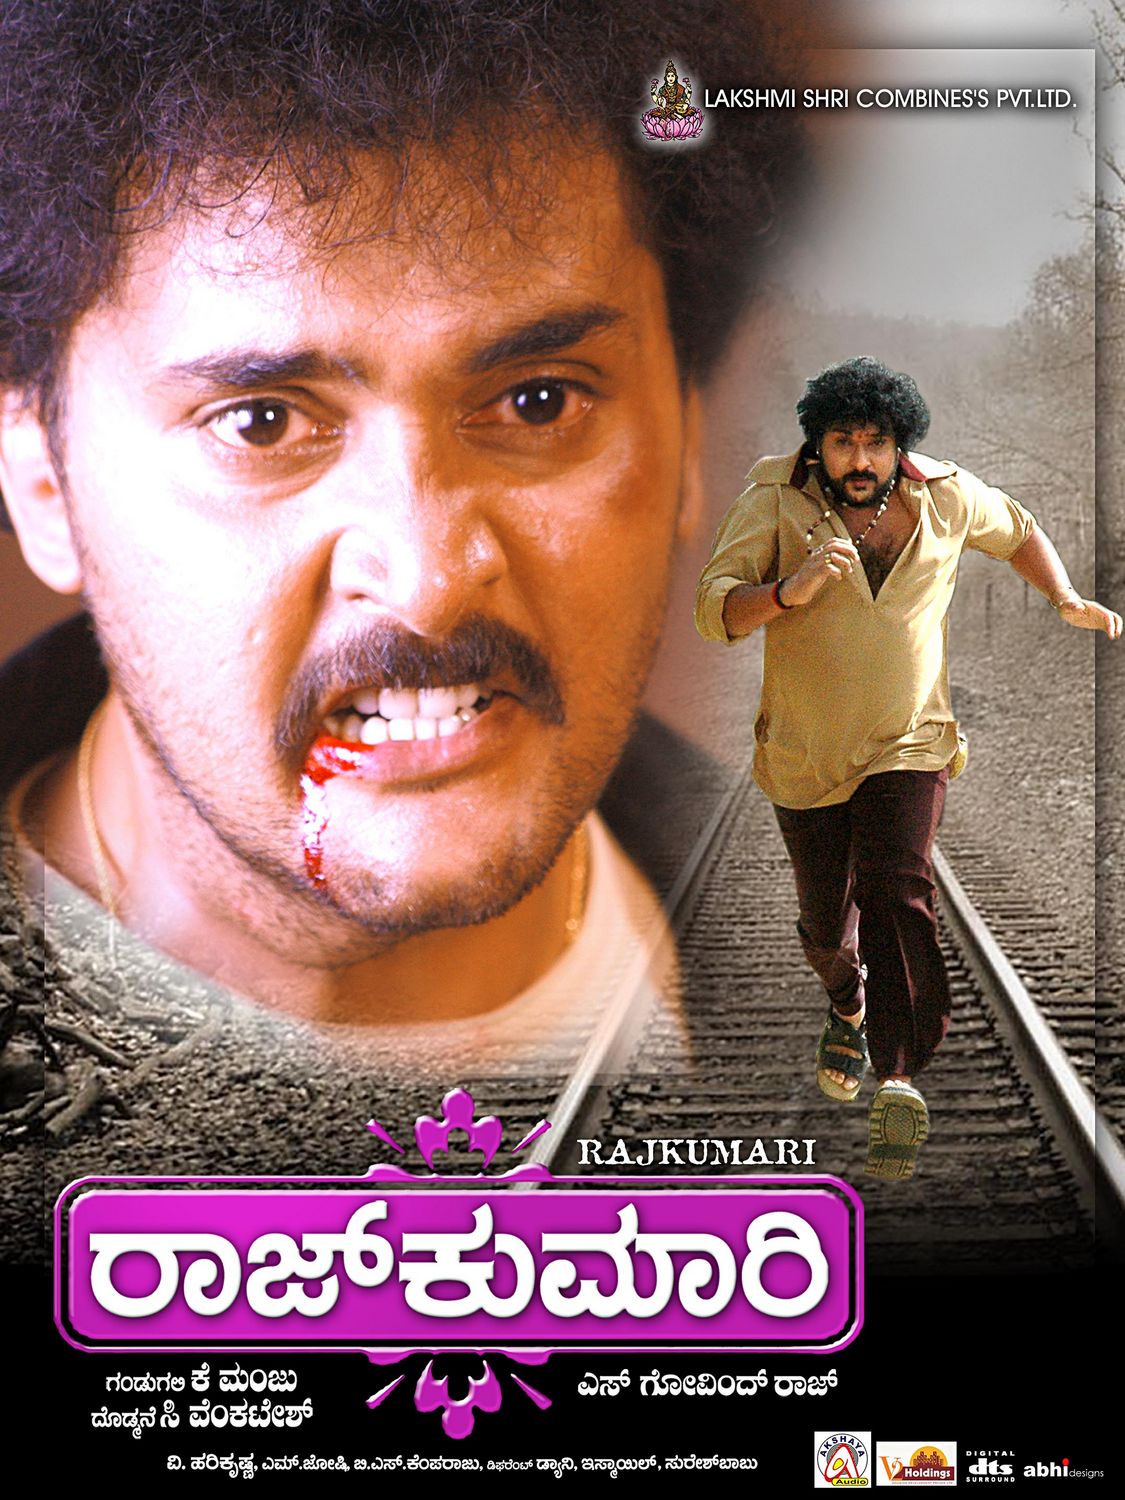 Extra Large Movie Poster Image for Rajkumari (#13 of 20)